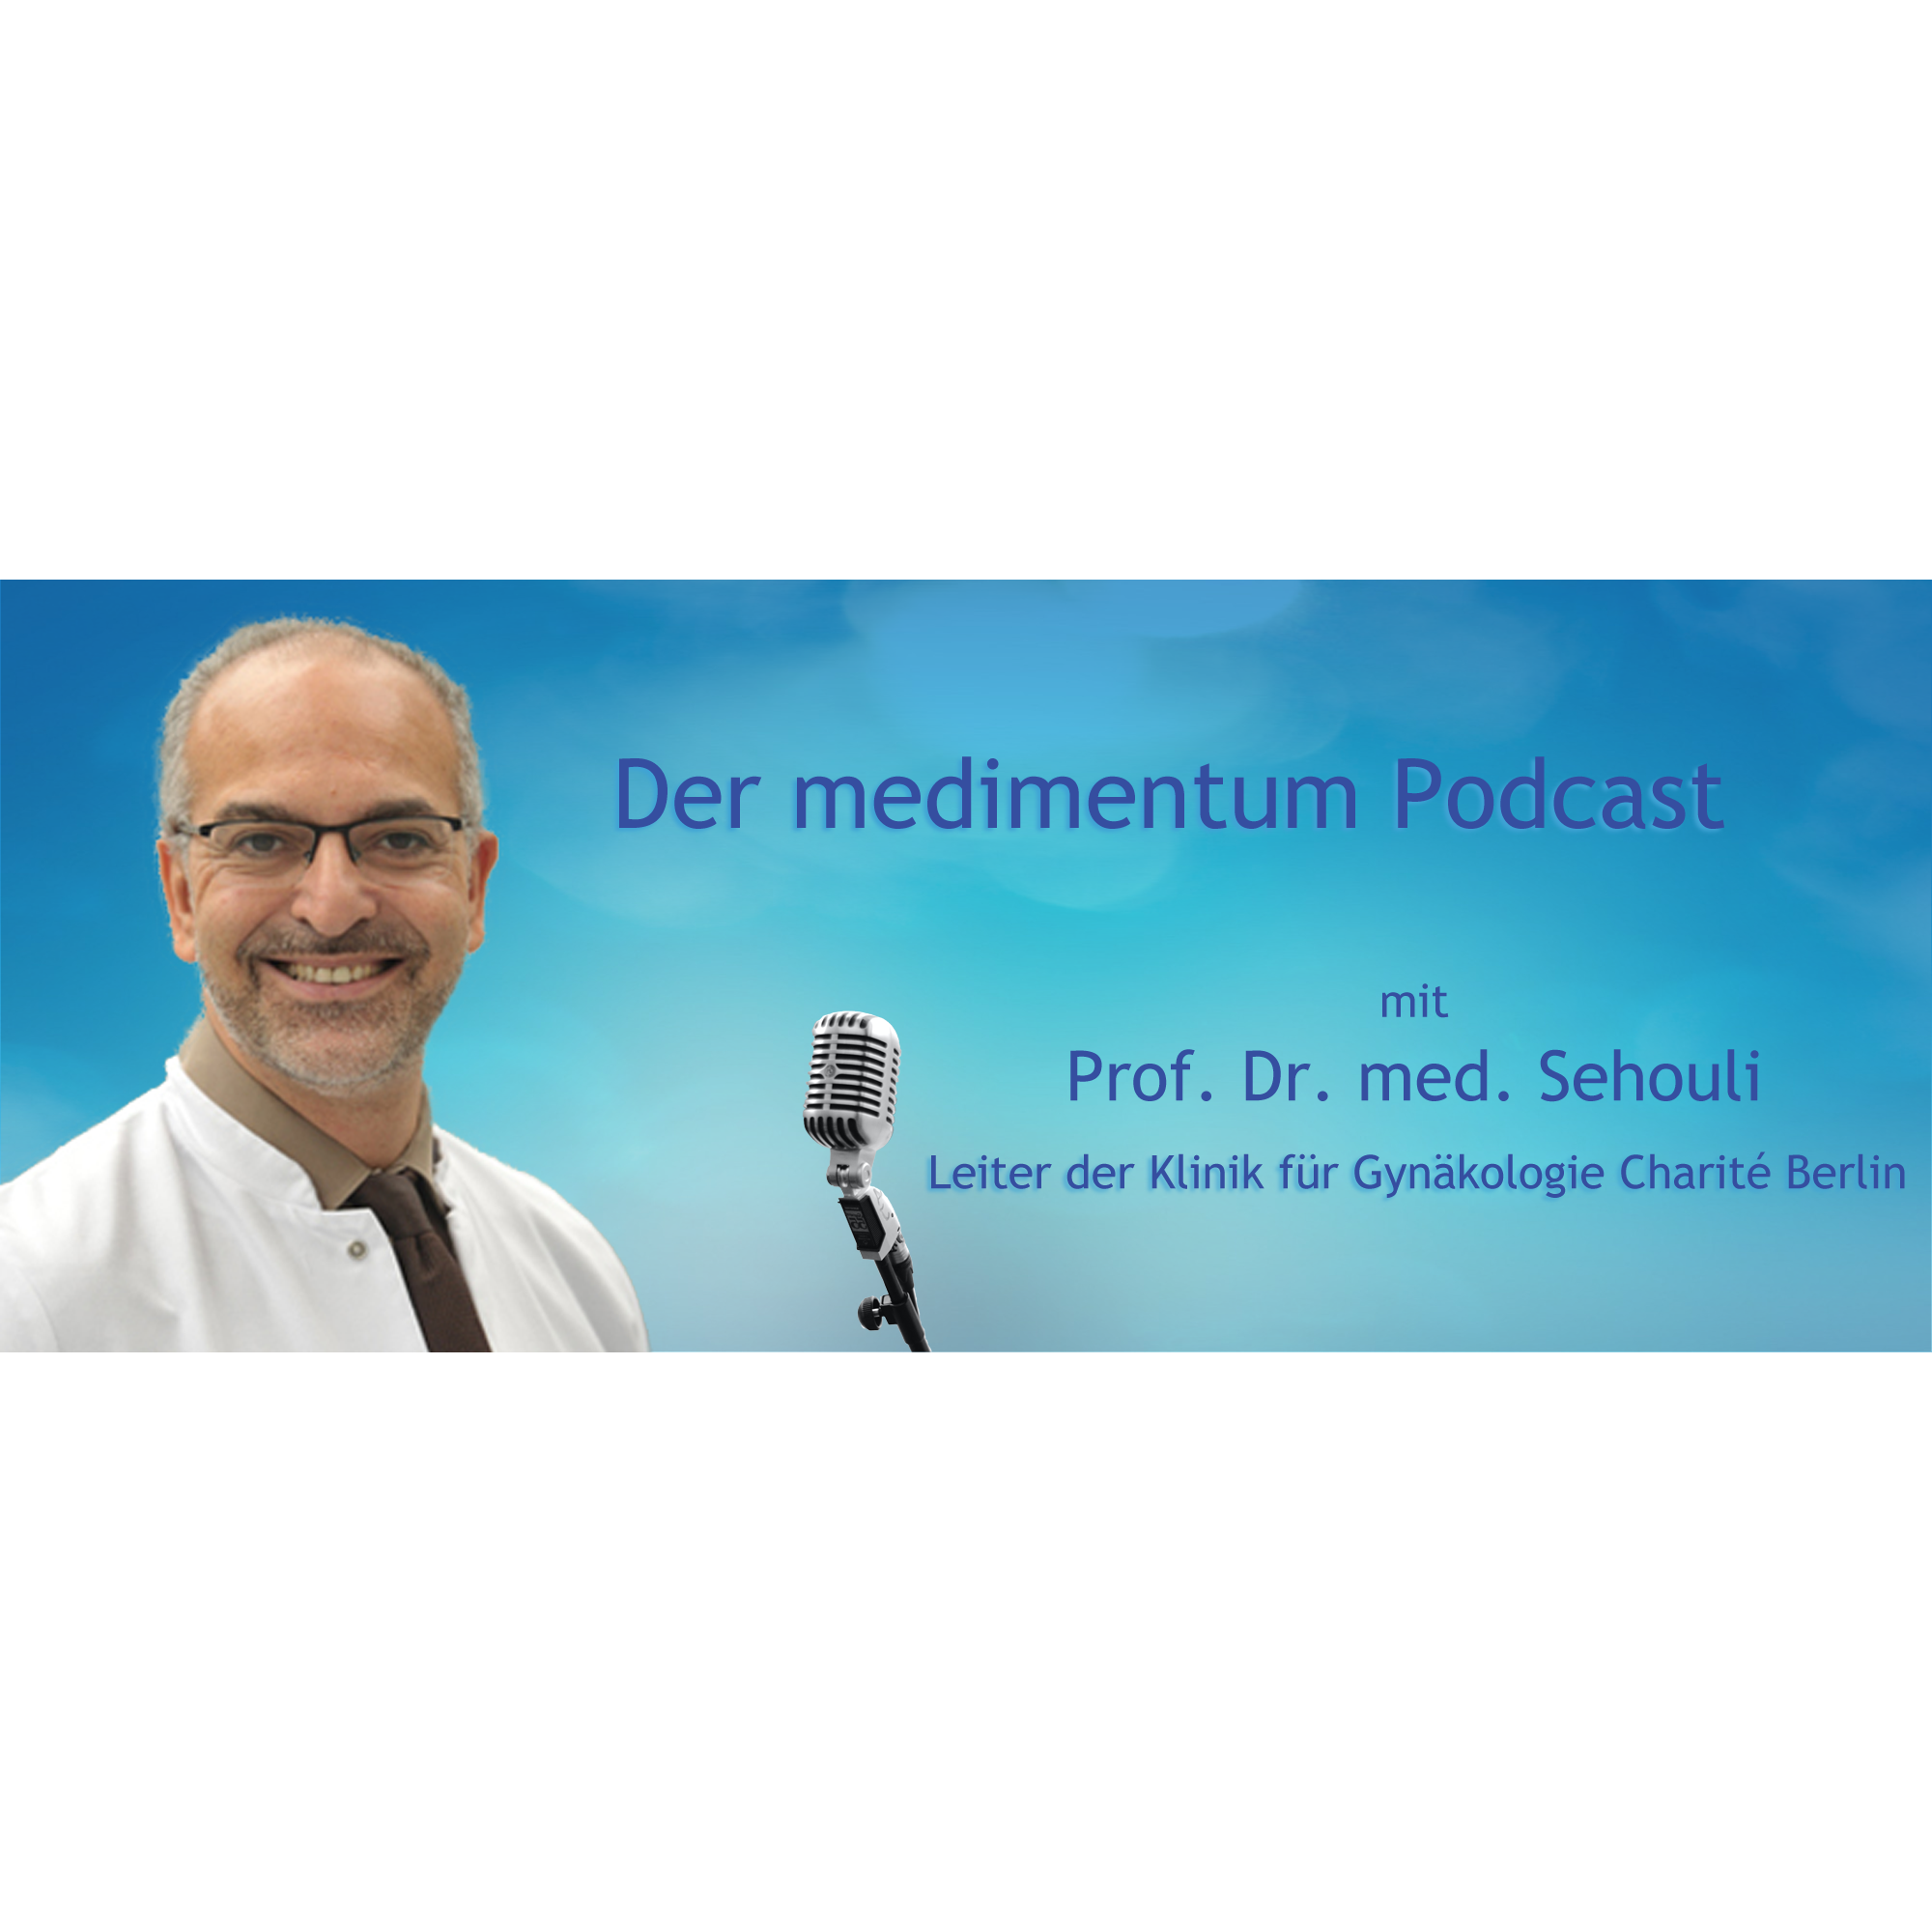 medimentum Podcast mit Prof. Dr. Sehouli Charité Berlin